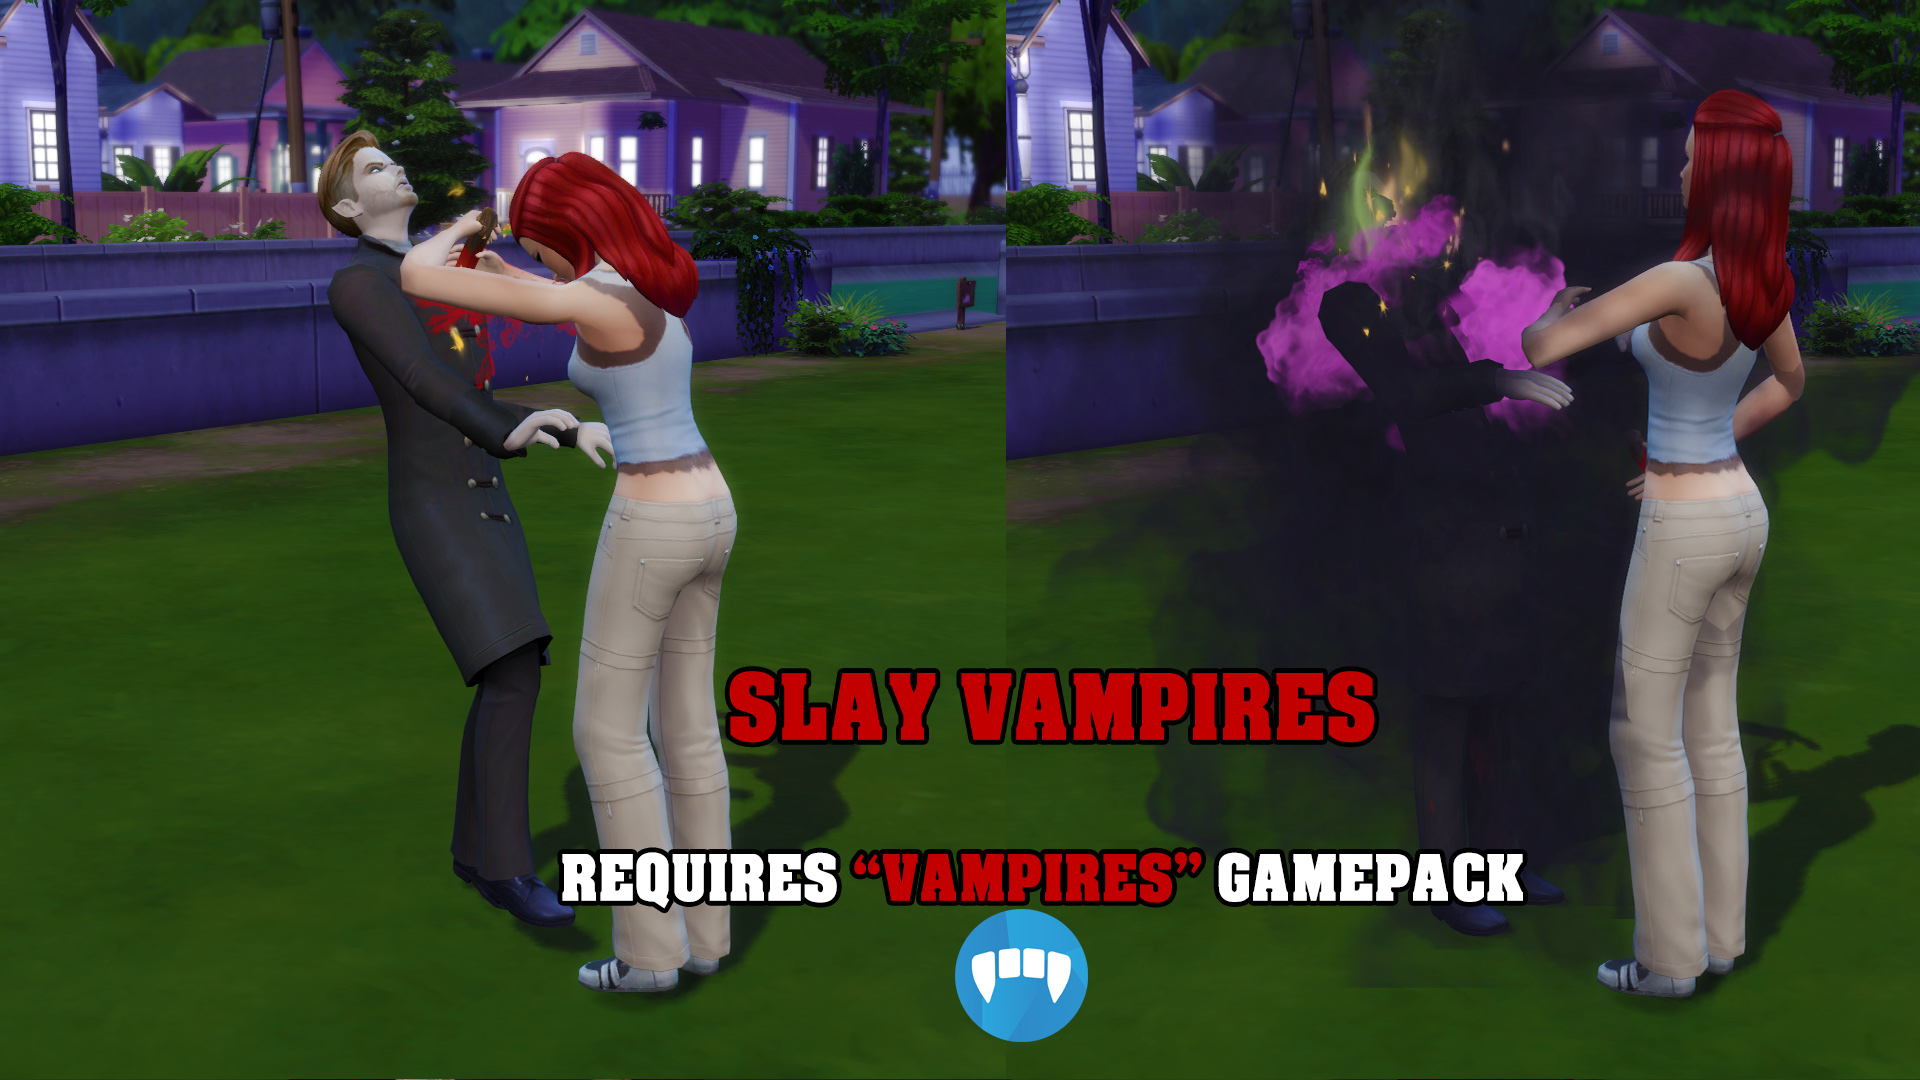 download the sims 4 vampires free download no surveys